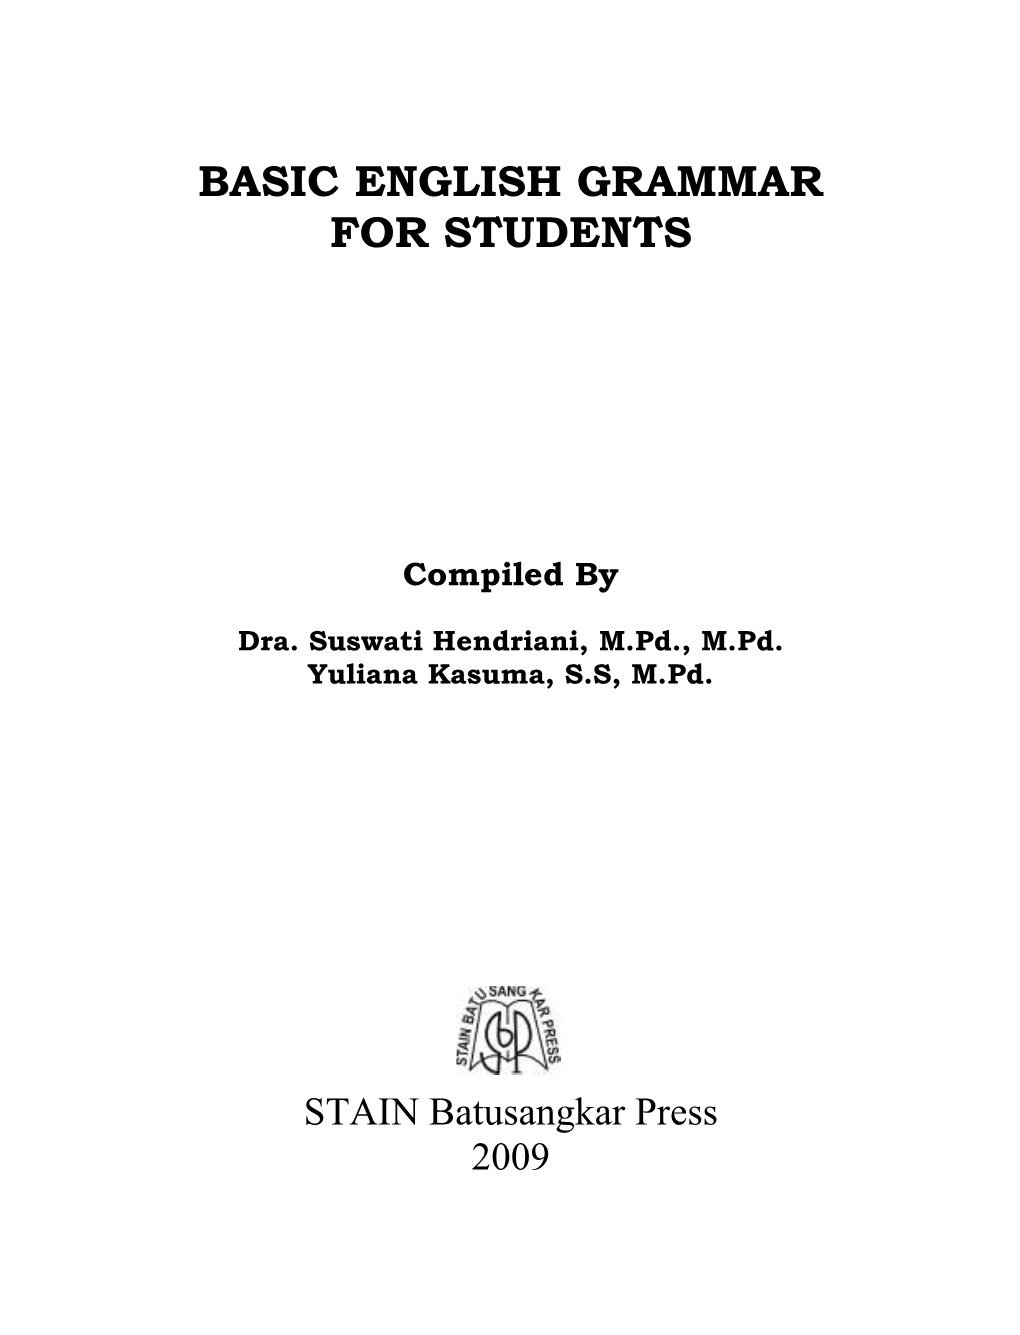 Basic English Grammar for Students